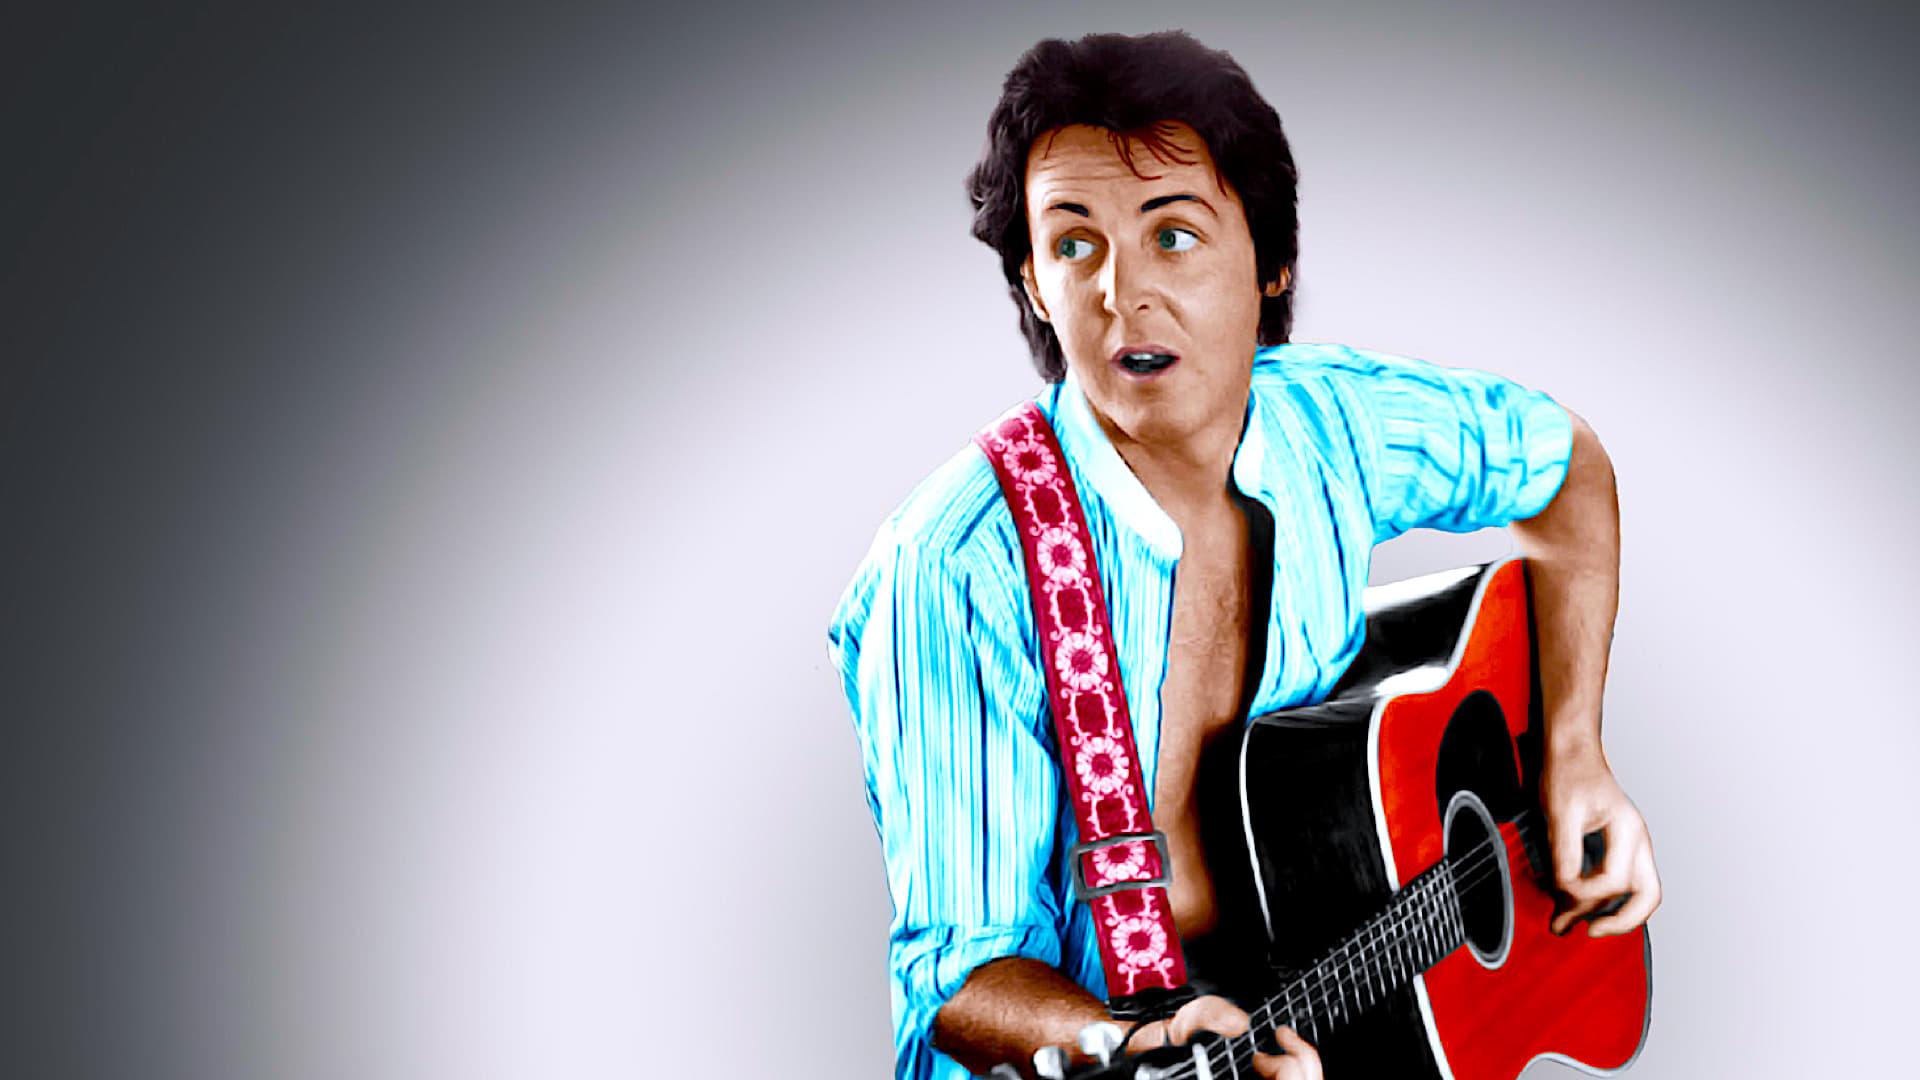 Paul McCartney: The McCartney Years backdrop